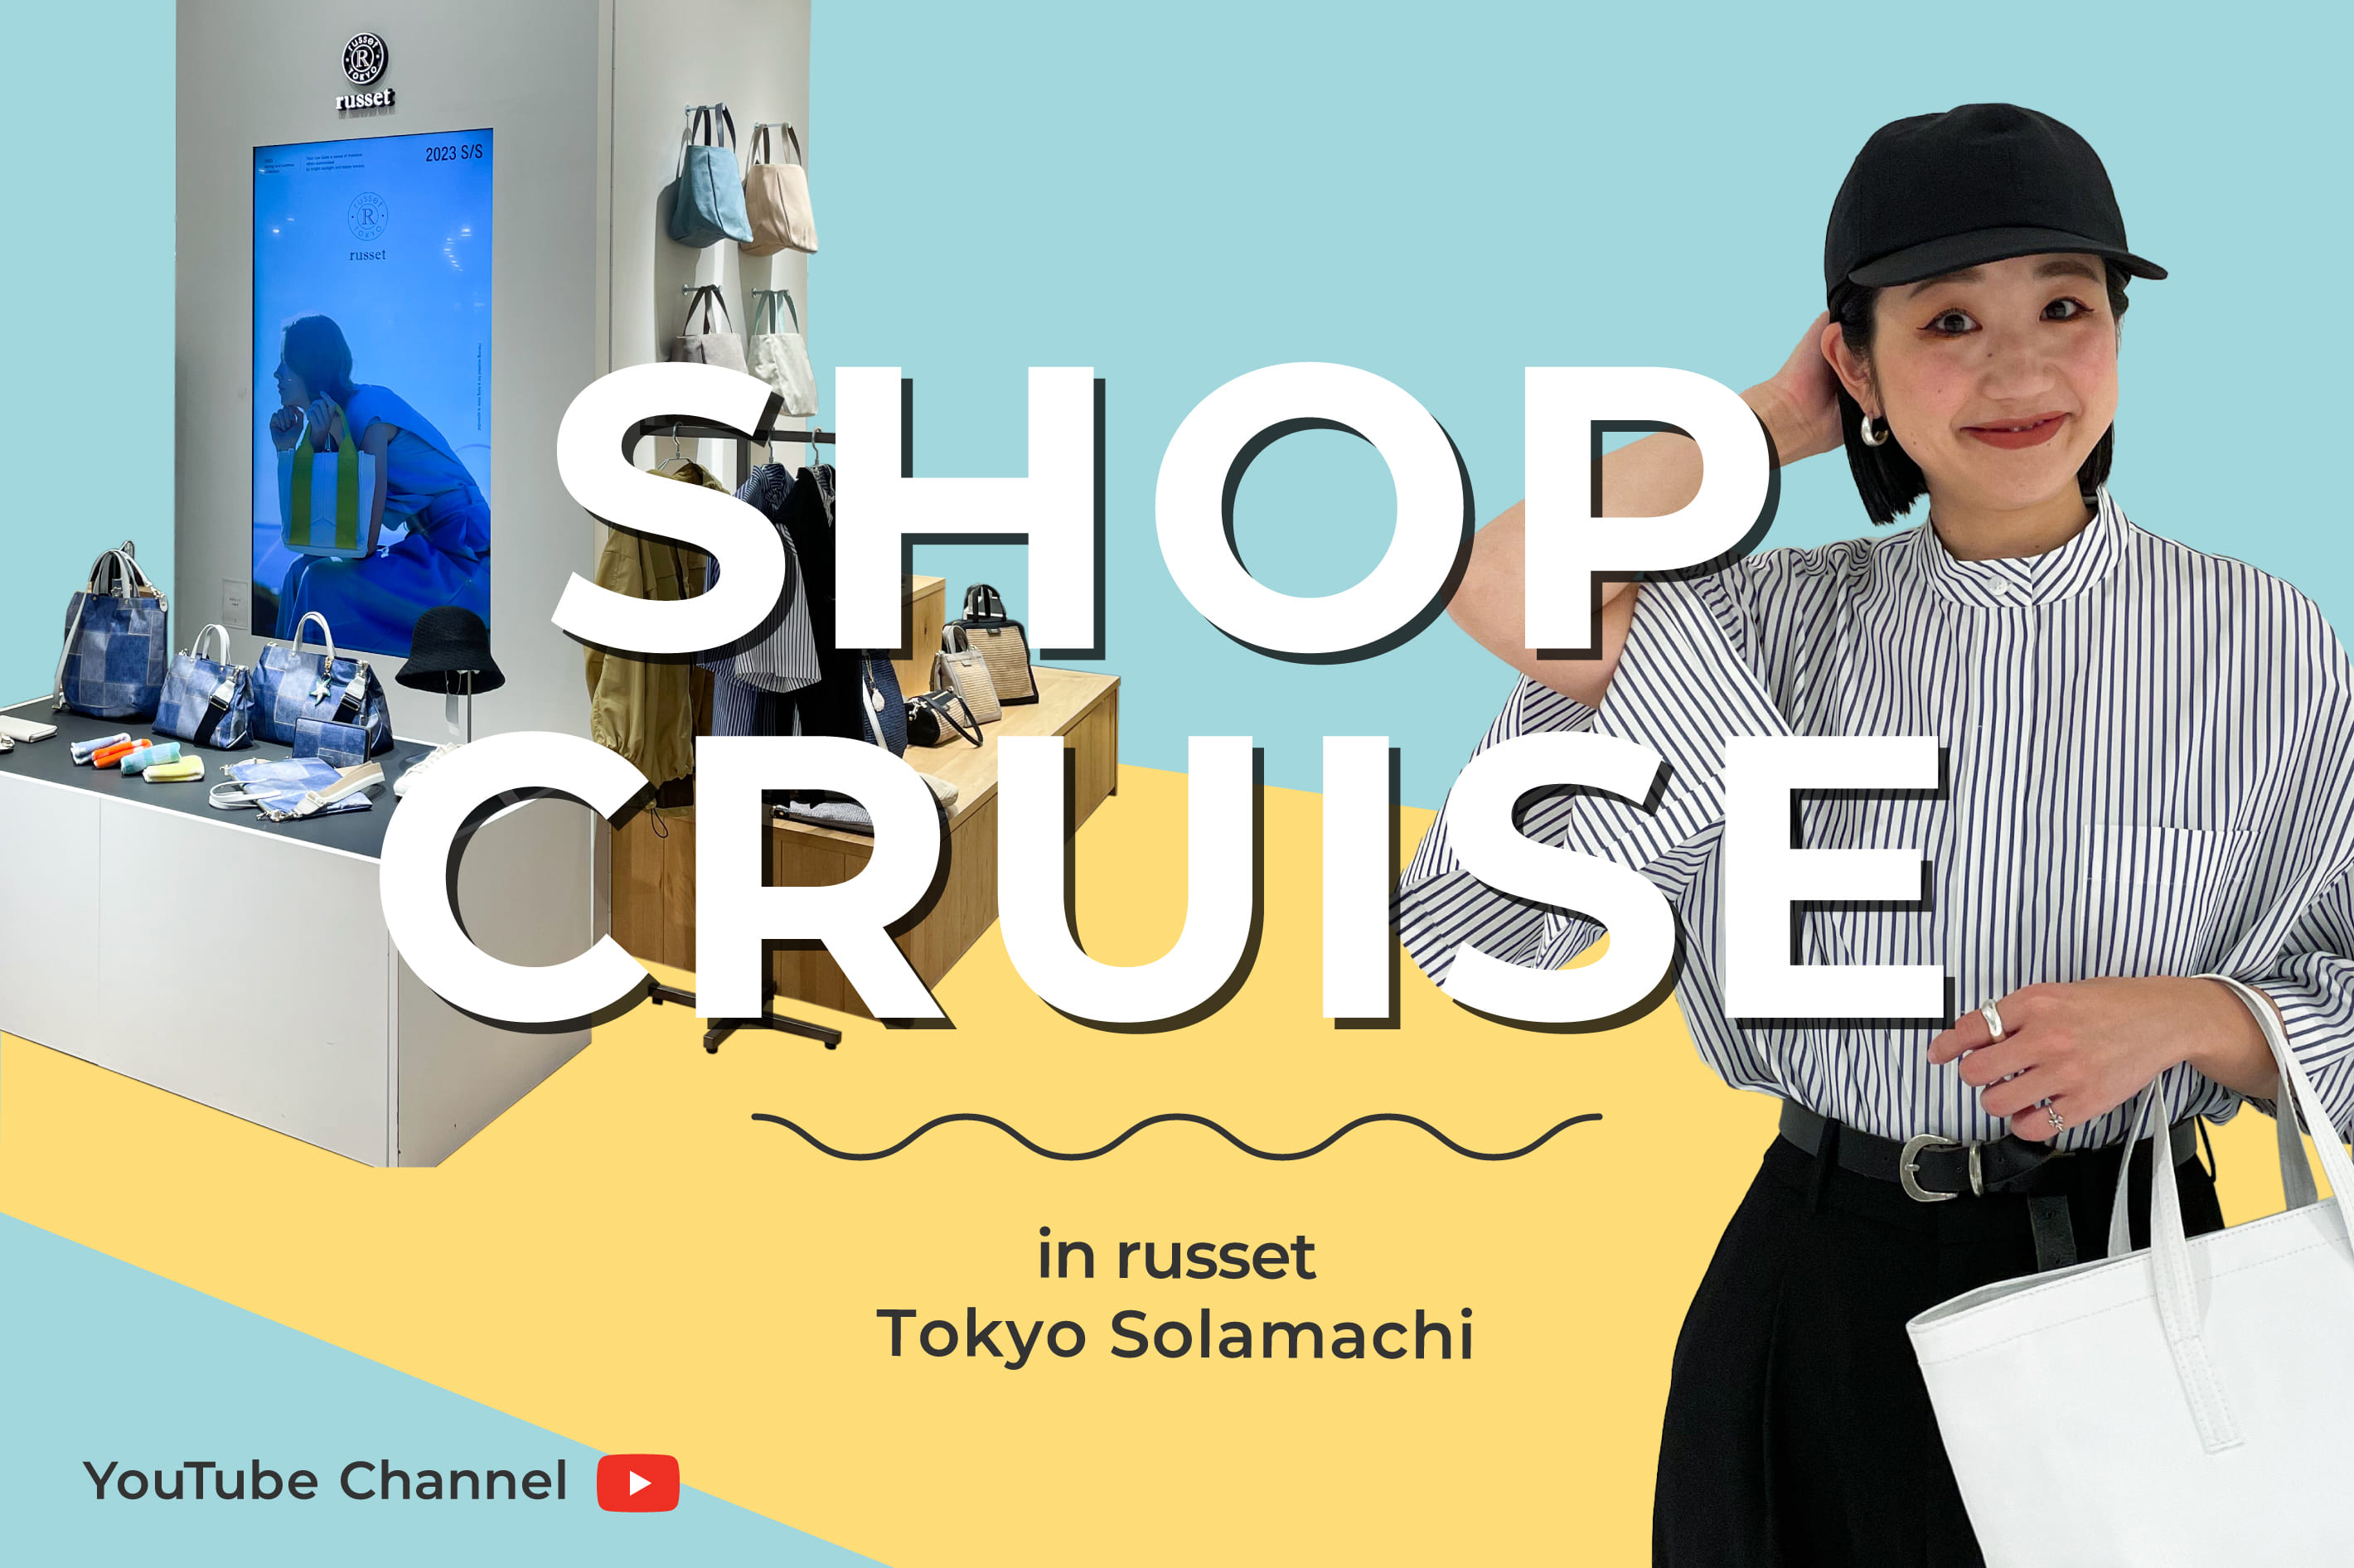 russet 《russet YouTube Channel》ラシット東京ソラマチ店をショップクルーズ！